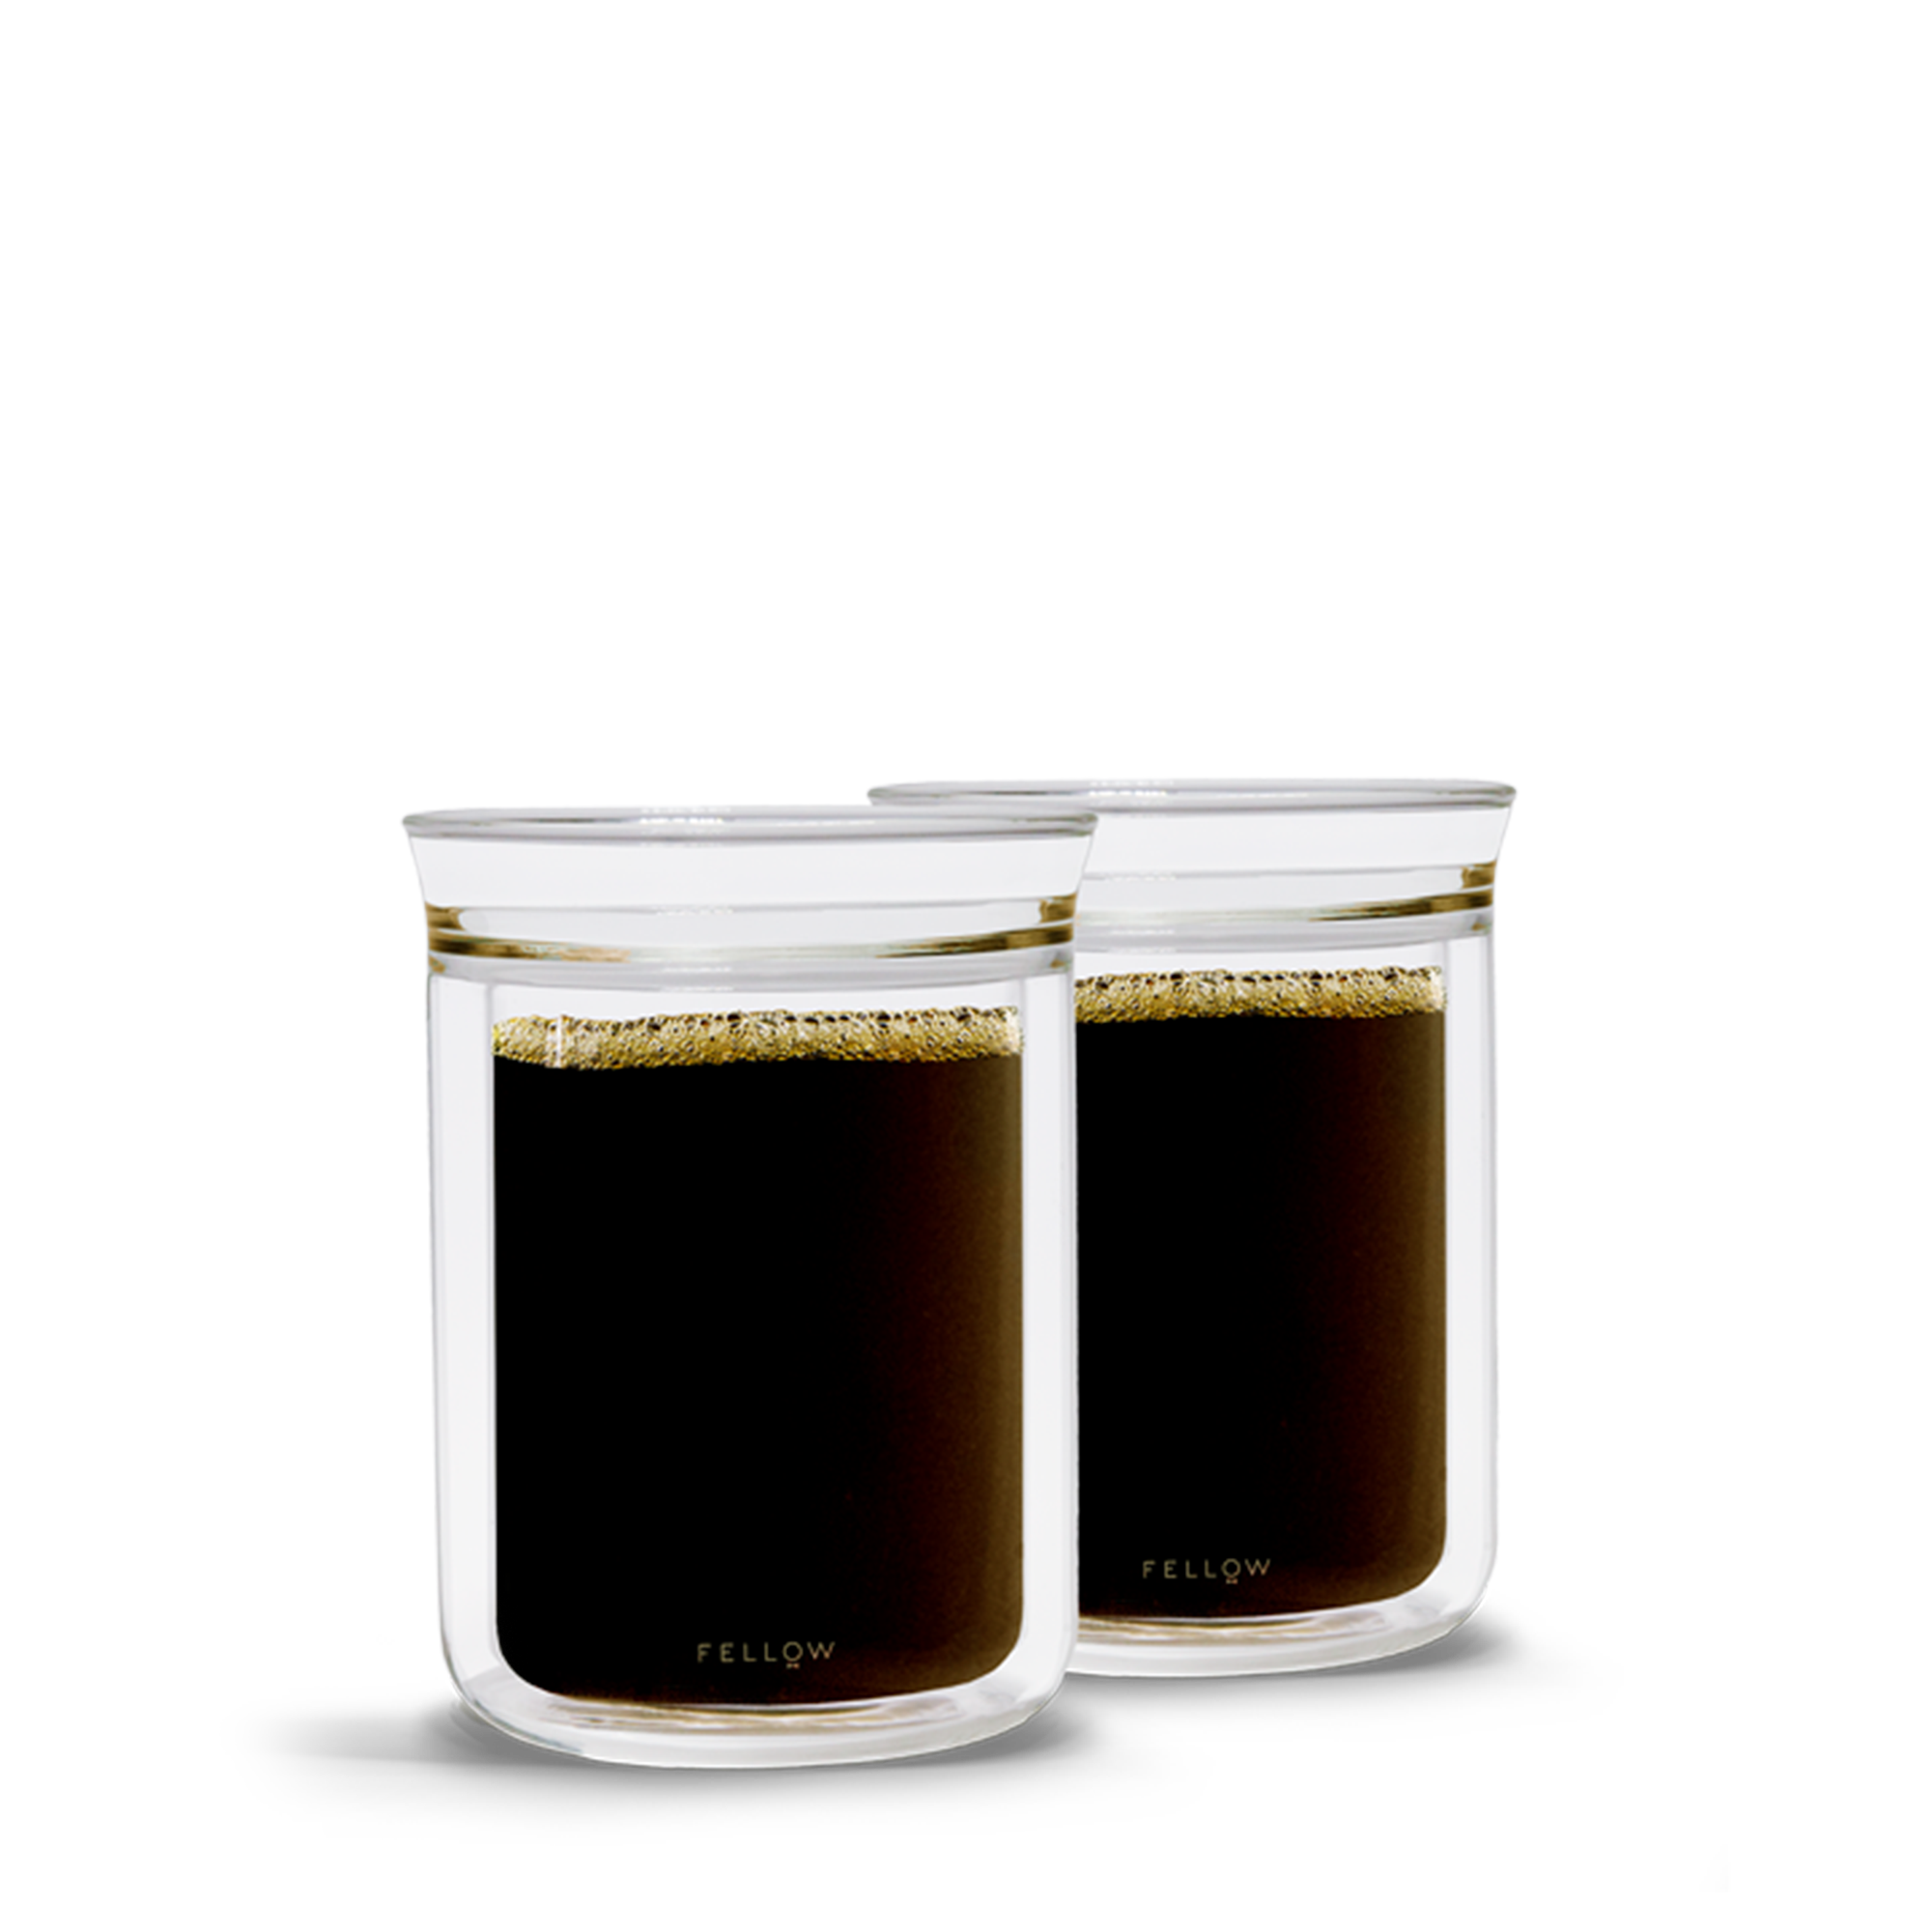 Brod & Taylor Double-Wall Insulated Glass Coffee/Tea Mugs (Set  of 2, 10oz / 300ml): Iced Tea Glasses